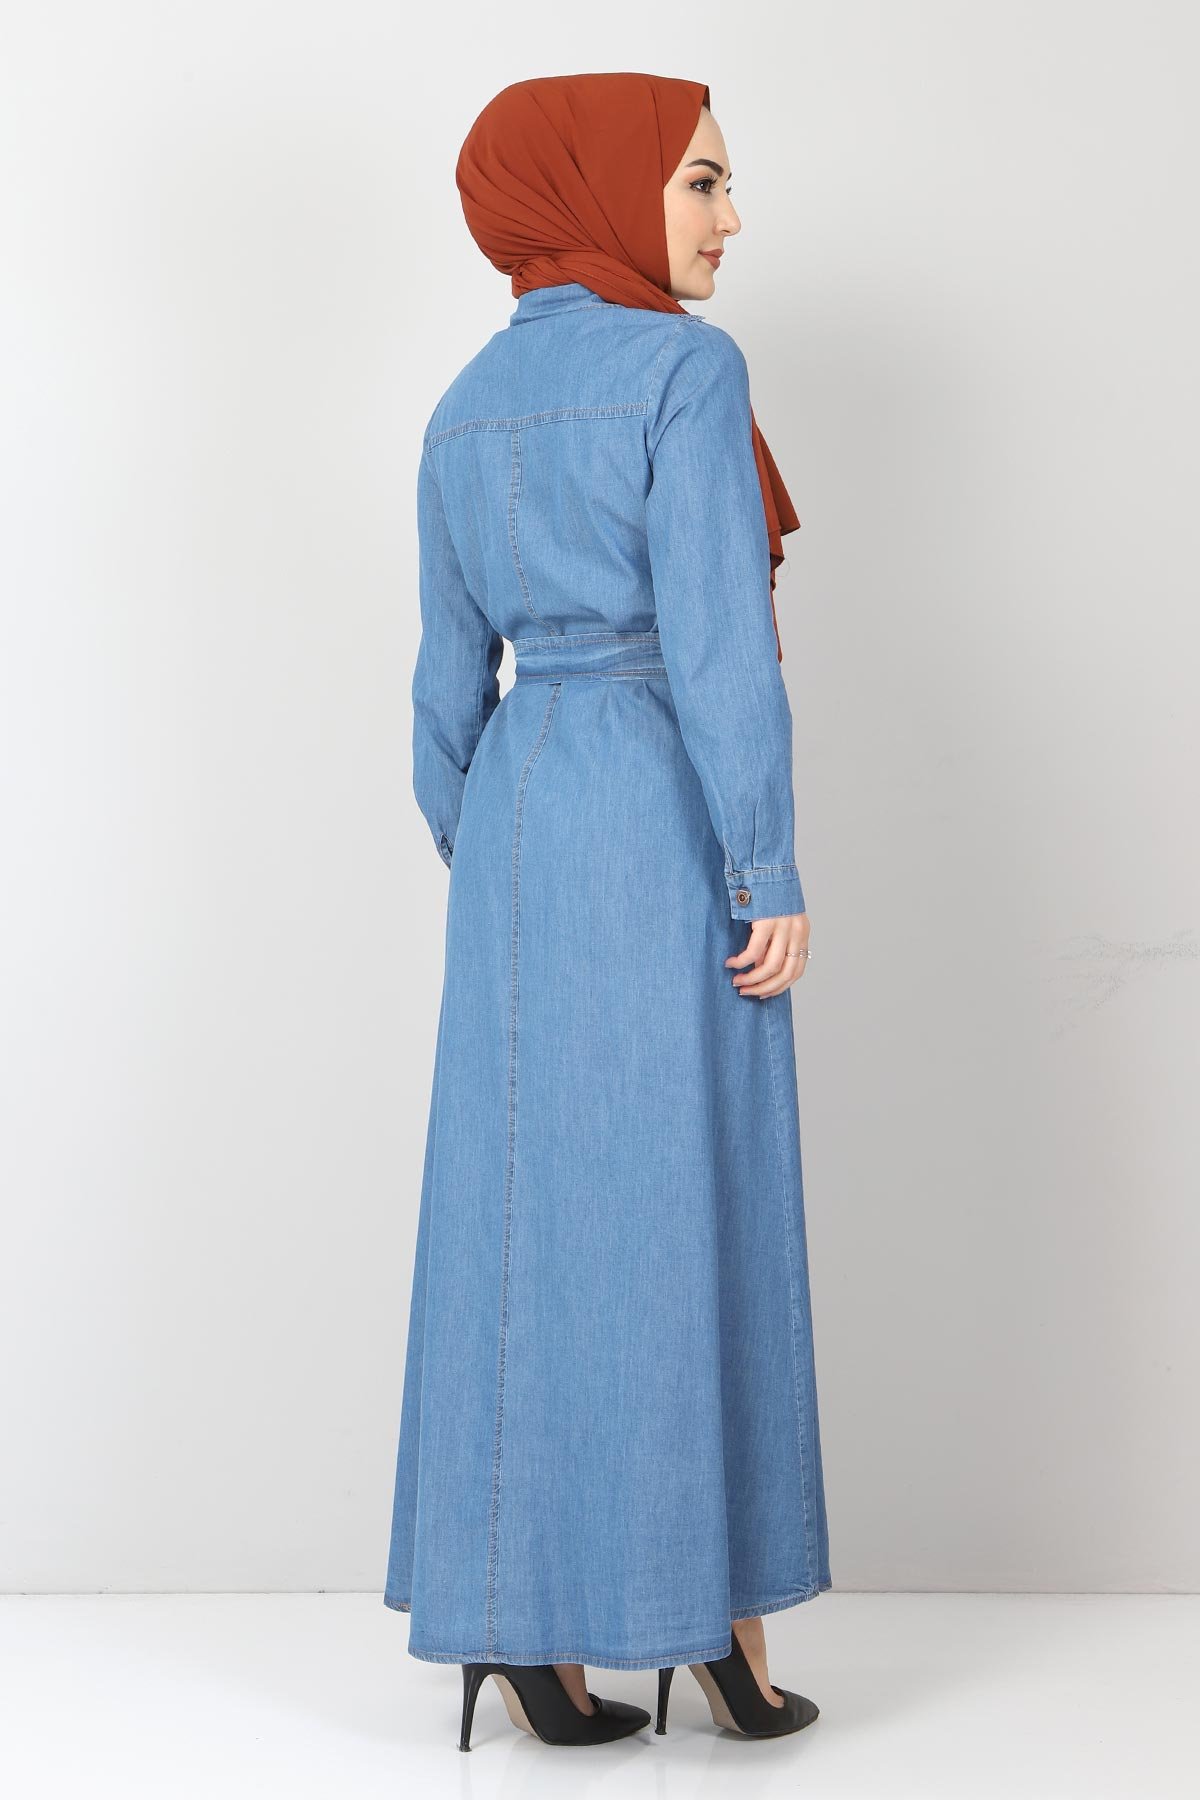 Önü Dantelli Kot Elbise TSD0129 Açık Mavi